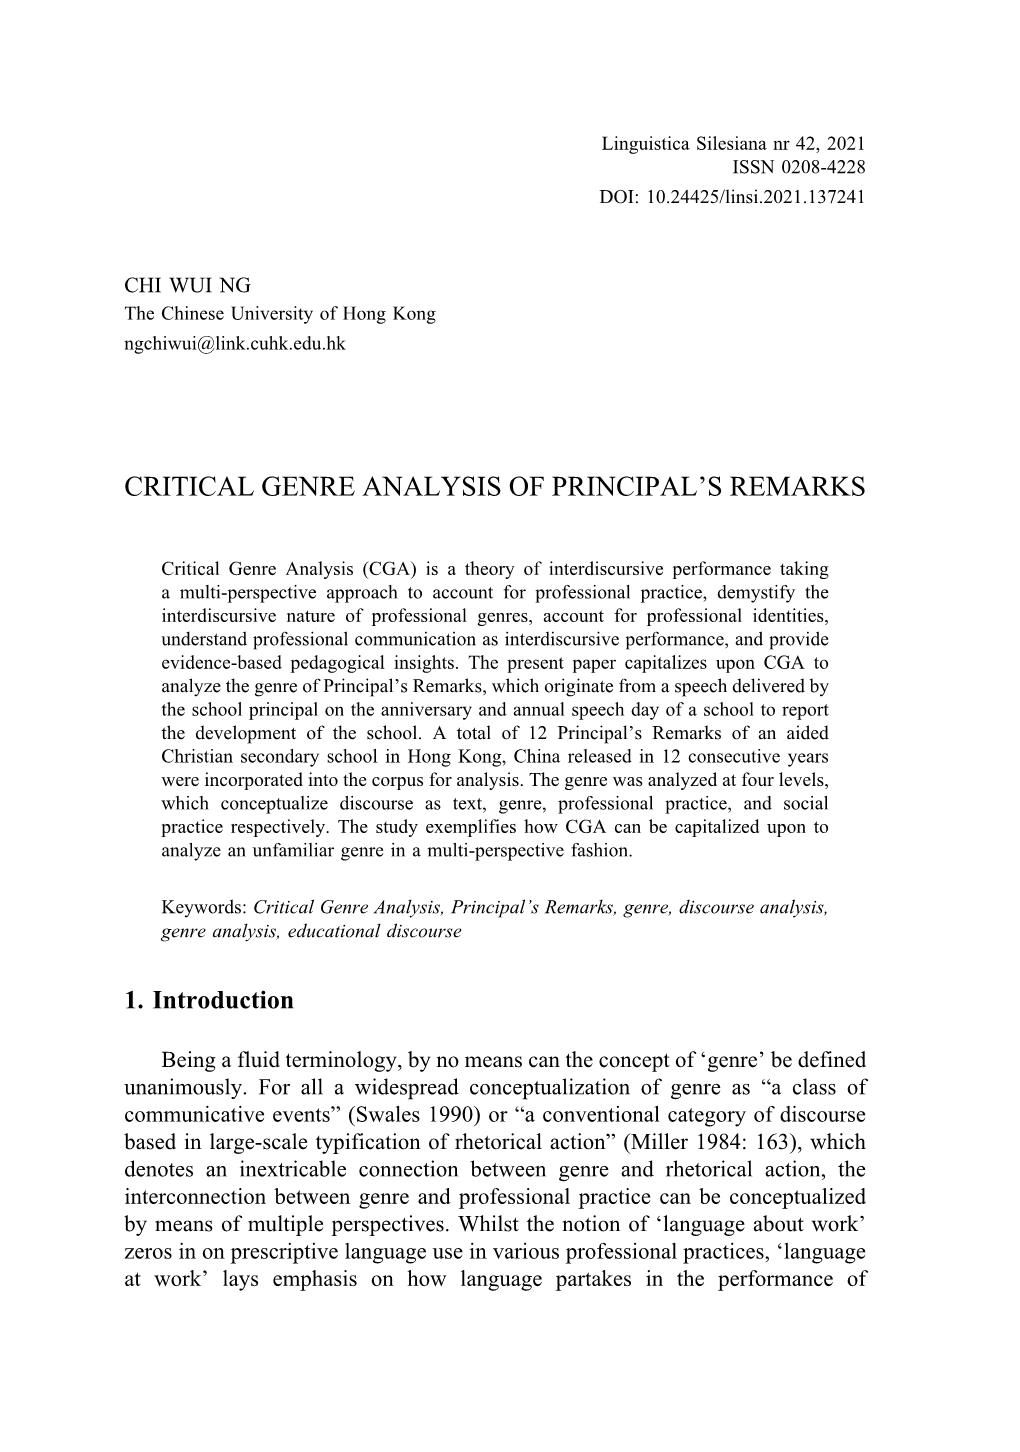 Critical Genre Analysis of Principal's Remarks 283